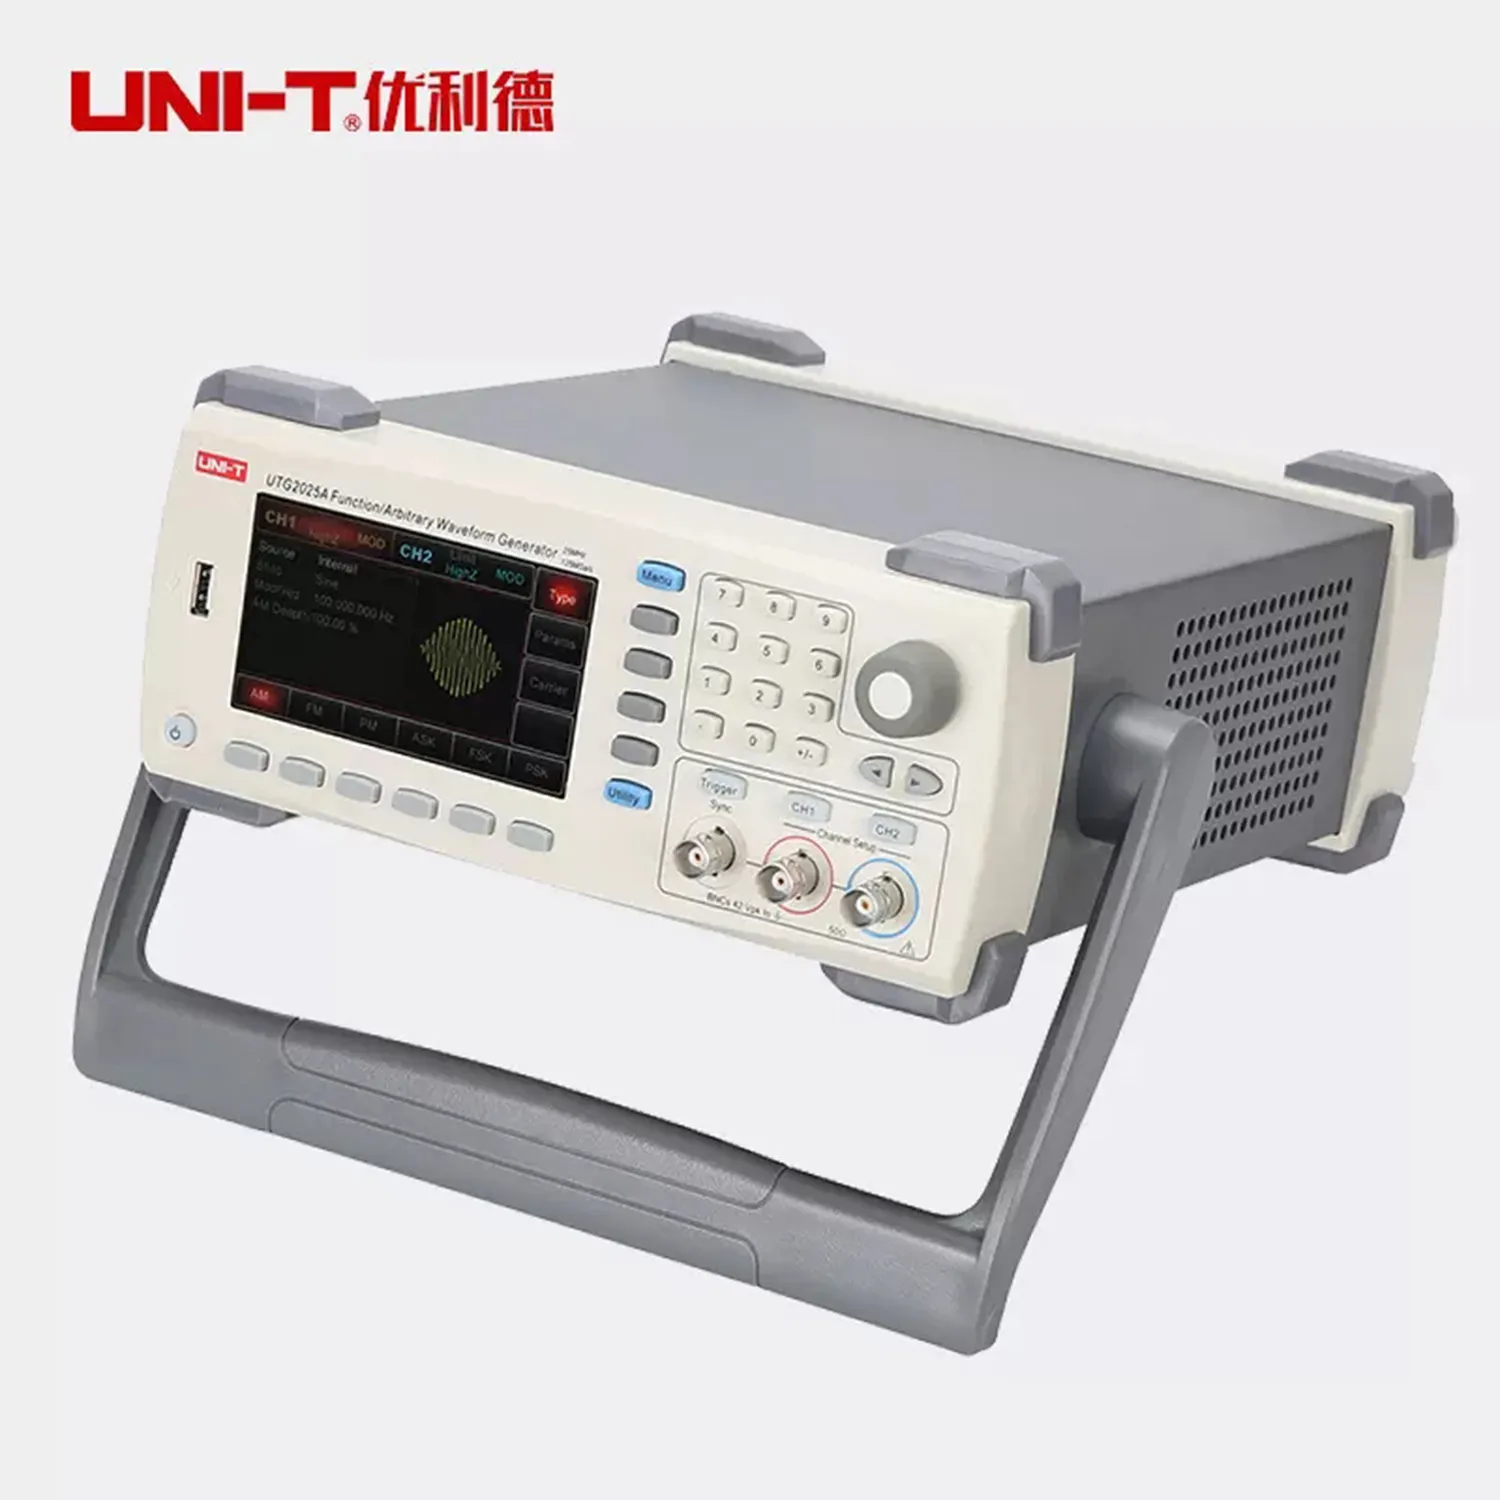 

UNI-T UTG2025A UTG2062A Function/Arbitrary Waveform Generator 14-bit High Resolution, 125MSa/s Sampling Rate,Burst Mode Function